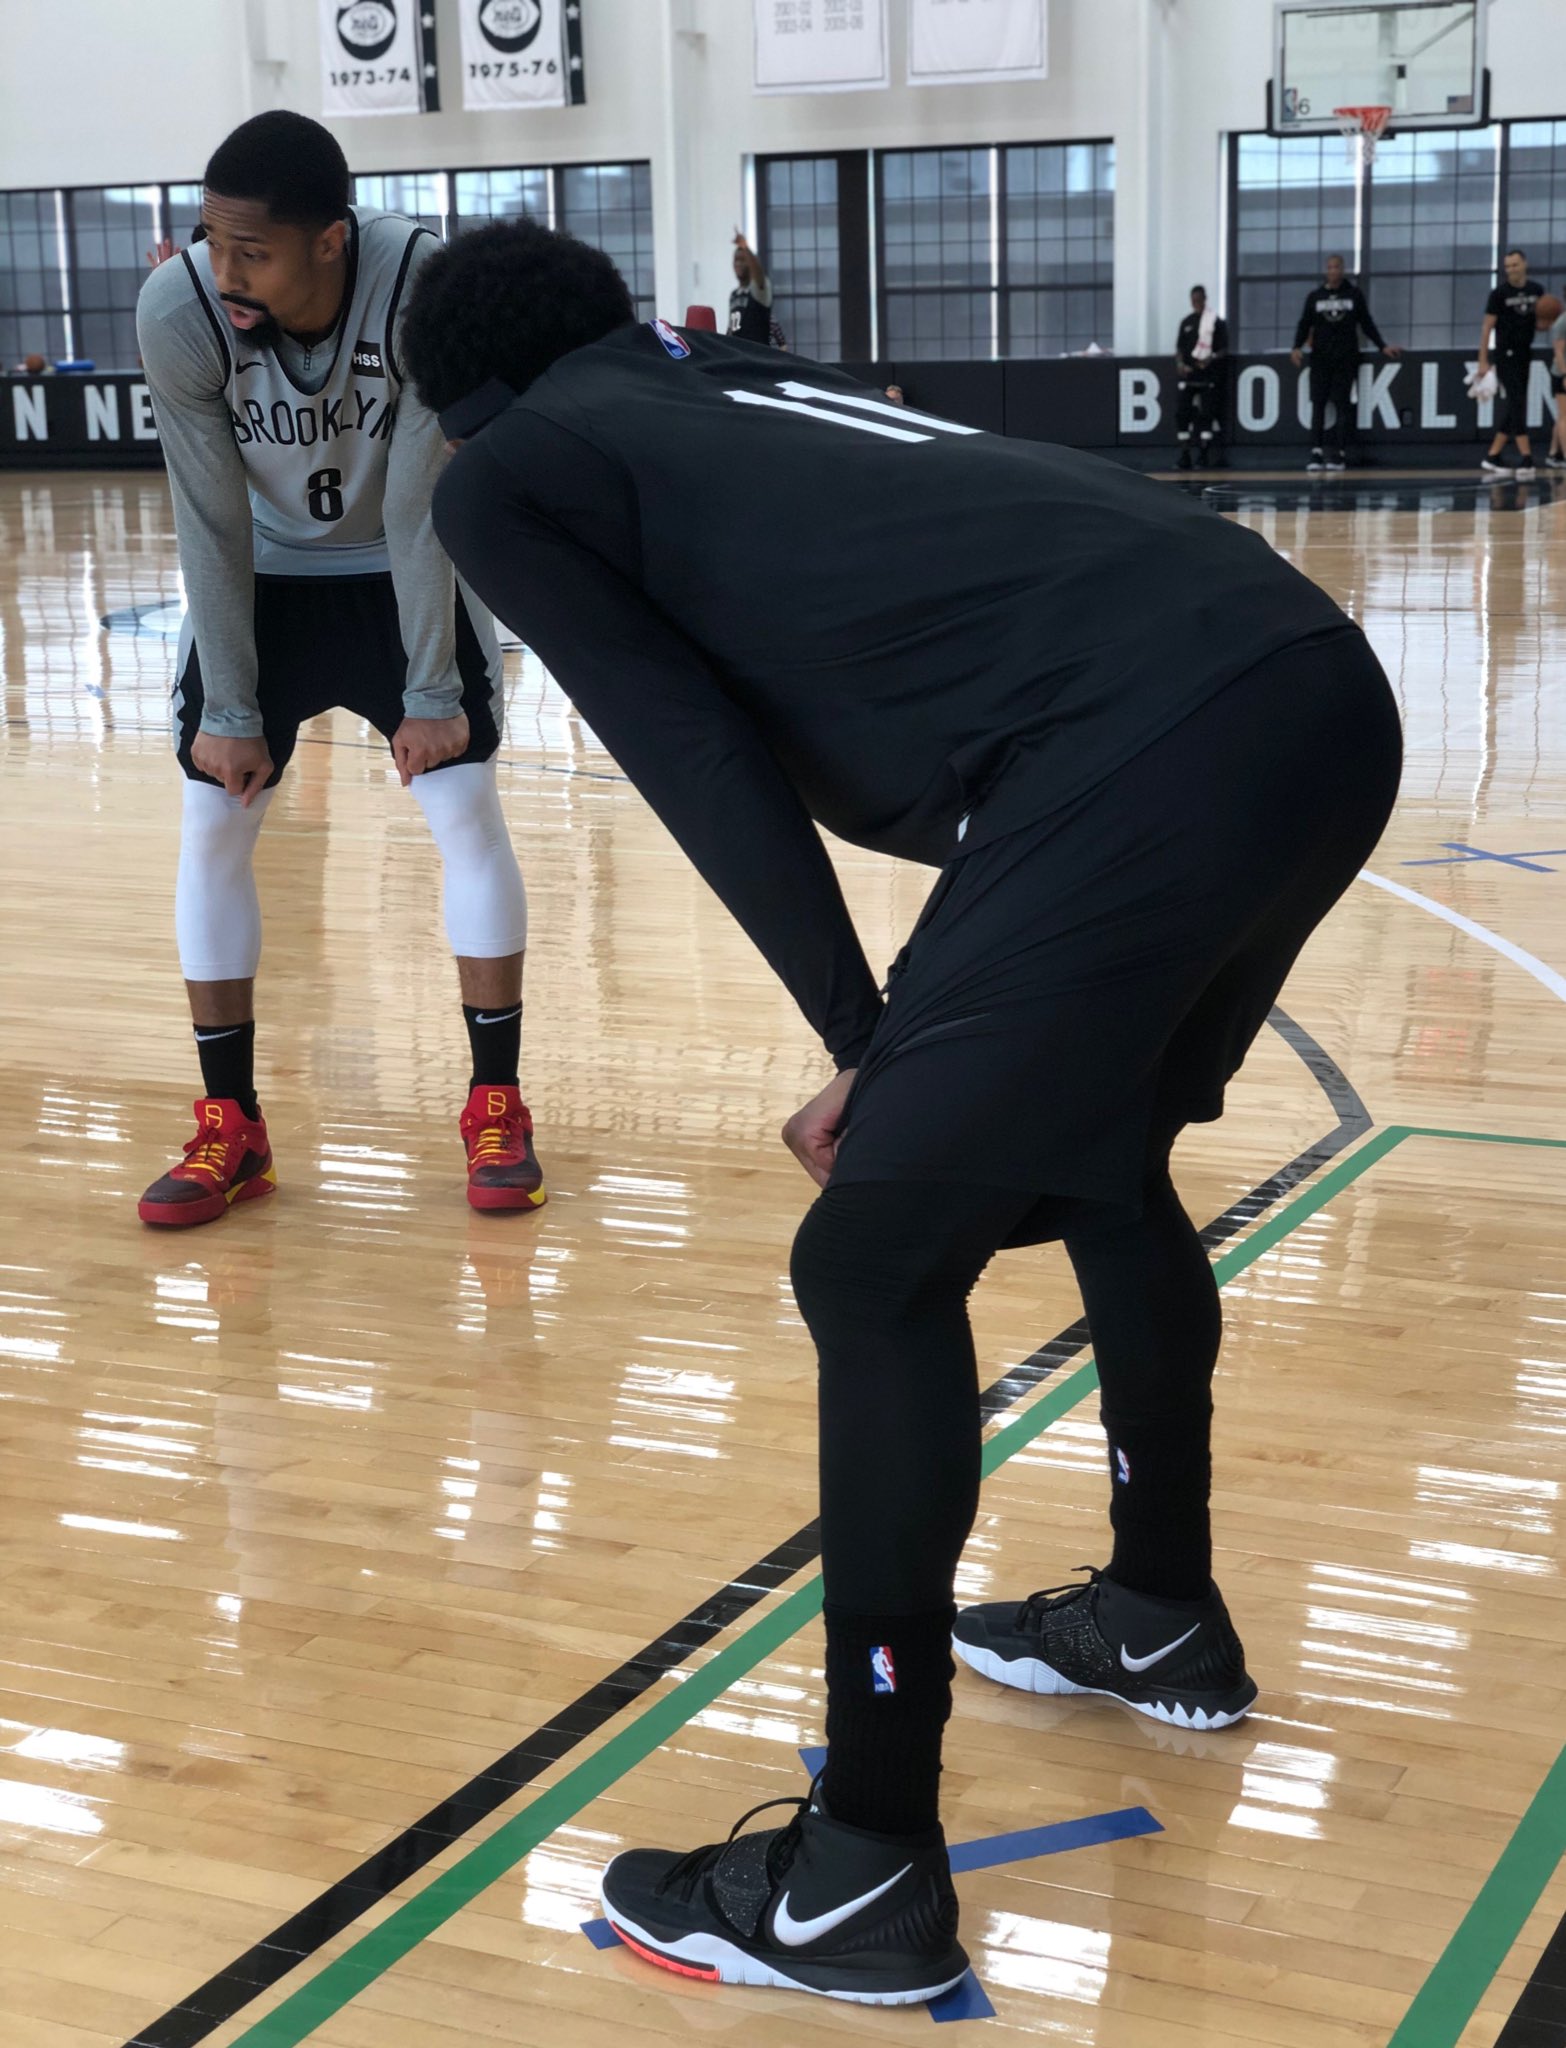 🏀 #NBAKicks 👟 Twitter: "Kyrie Irving practices in the Nike Kyrie 6 in Brooklyn! #NetsAllAccess #NBAKicks https://t.co/Sd3HqHxfL4" Twitter